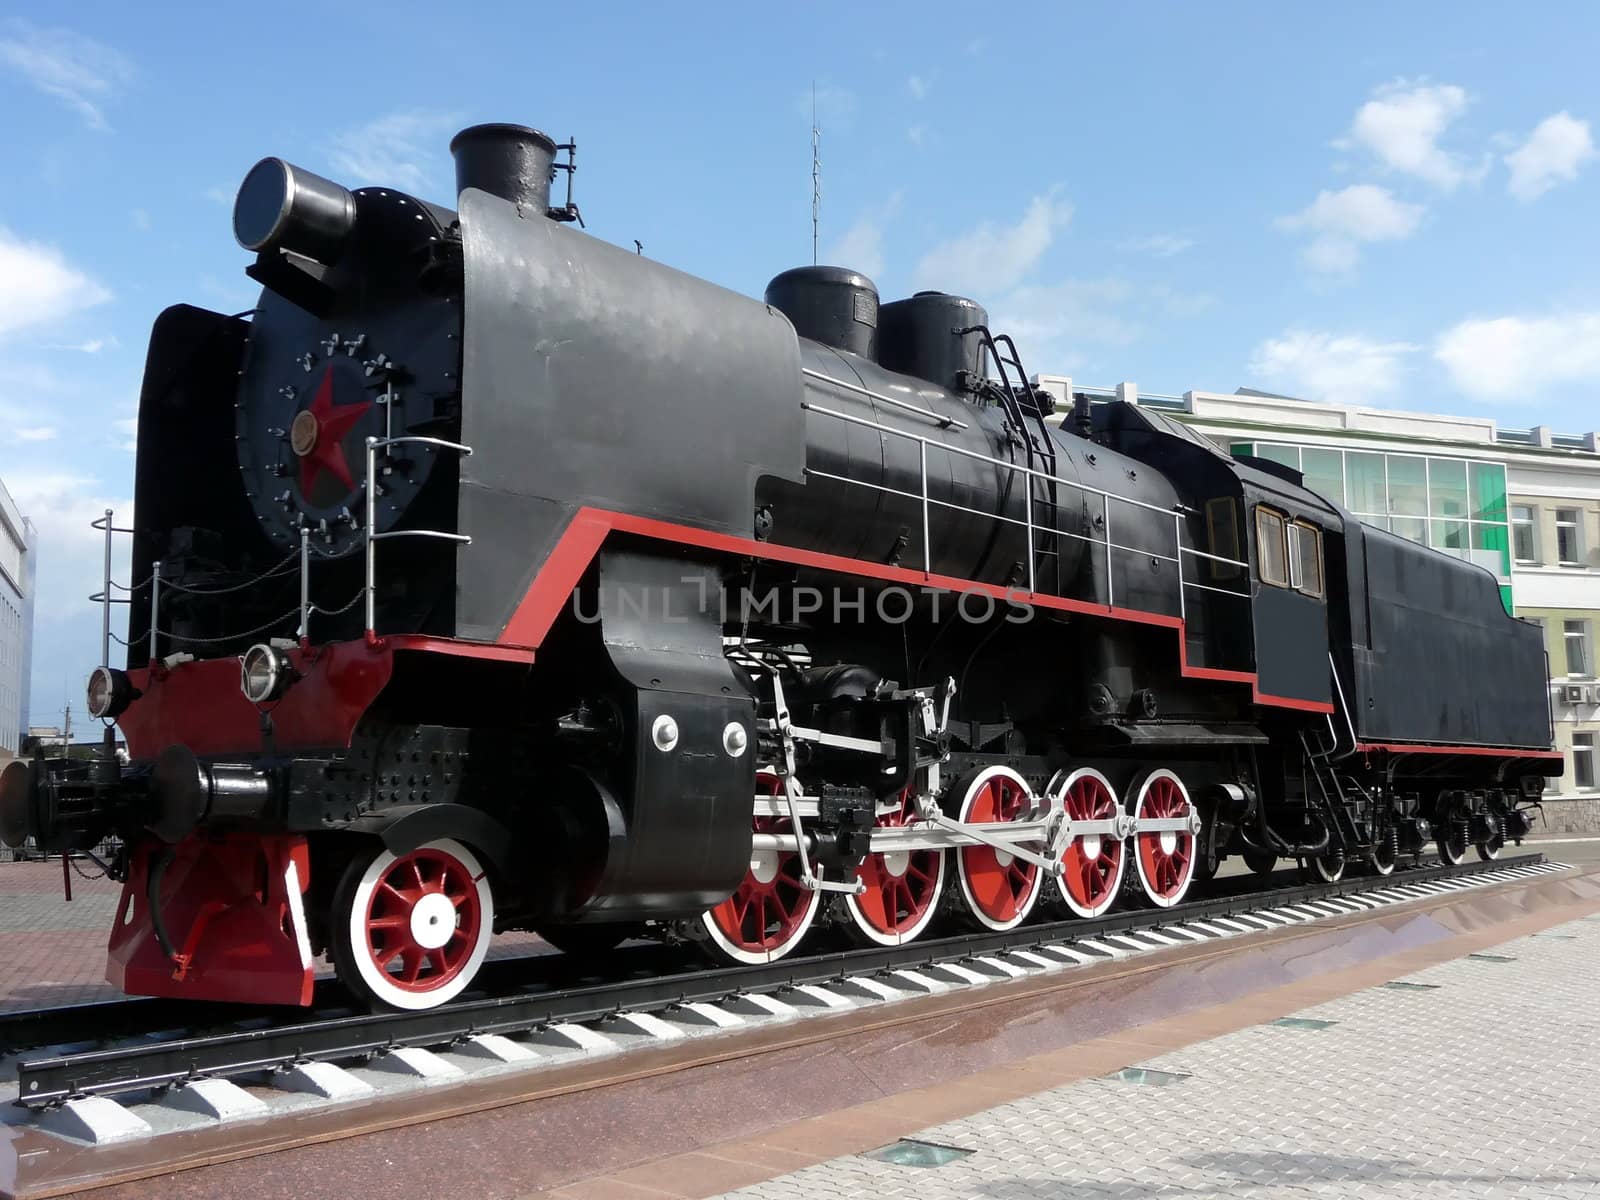 Black locomotive by tomatto